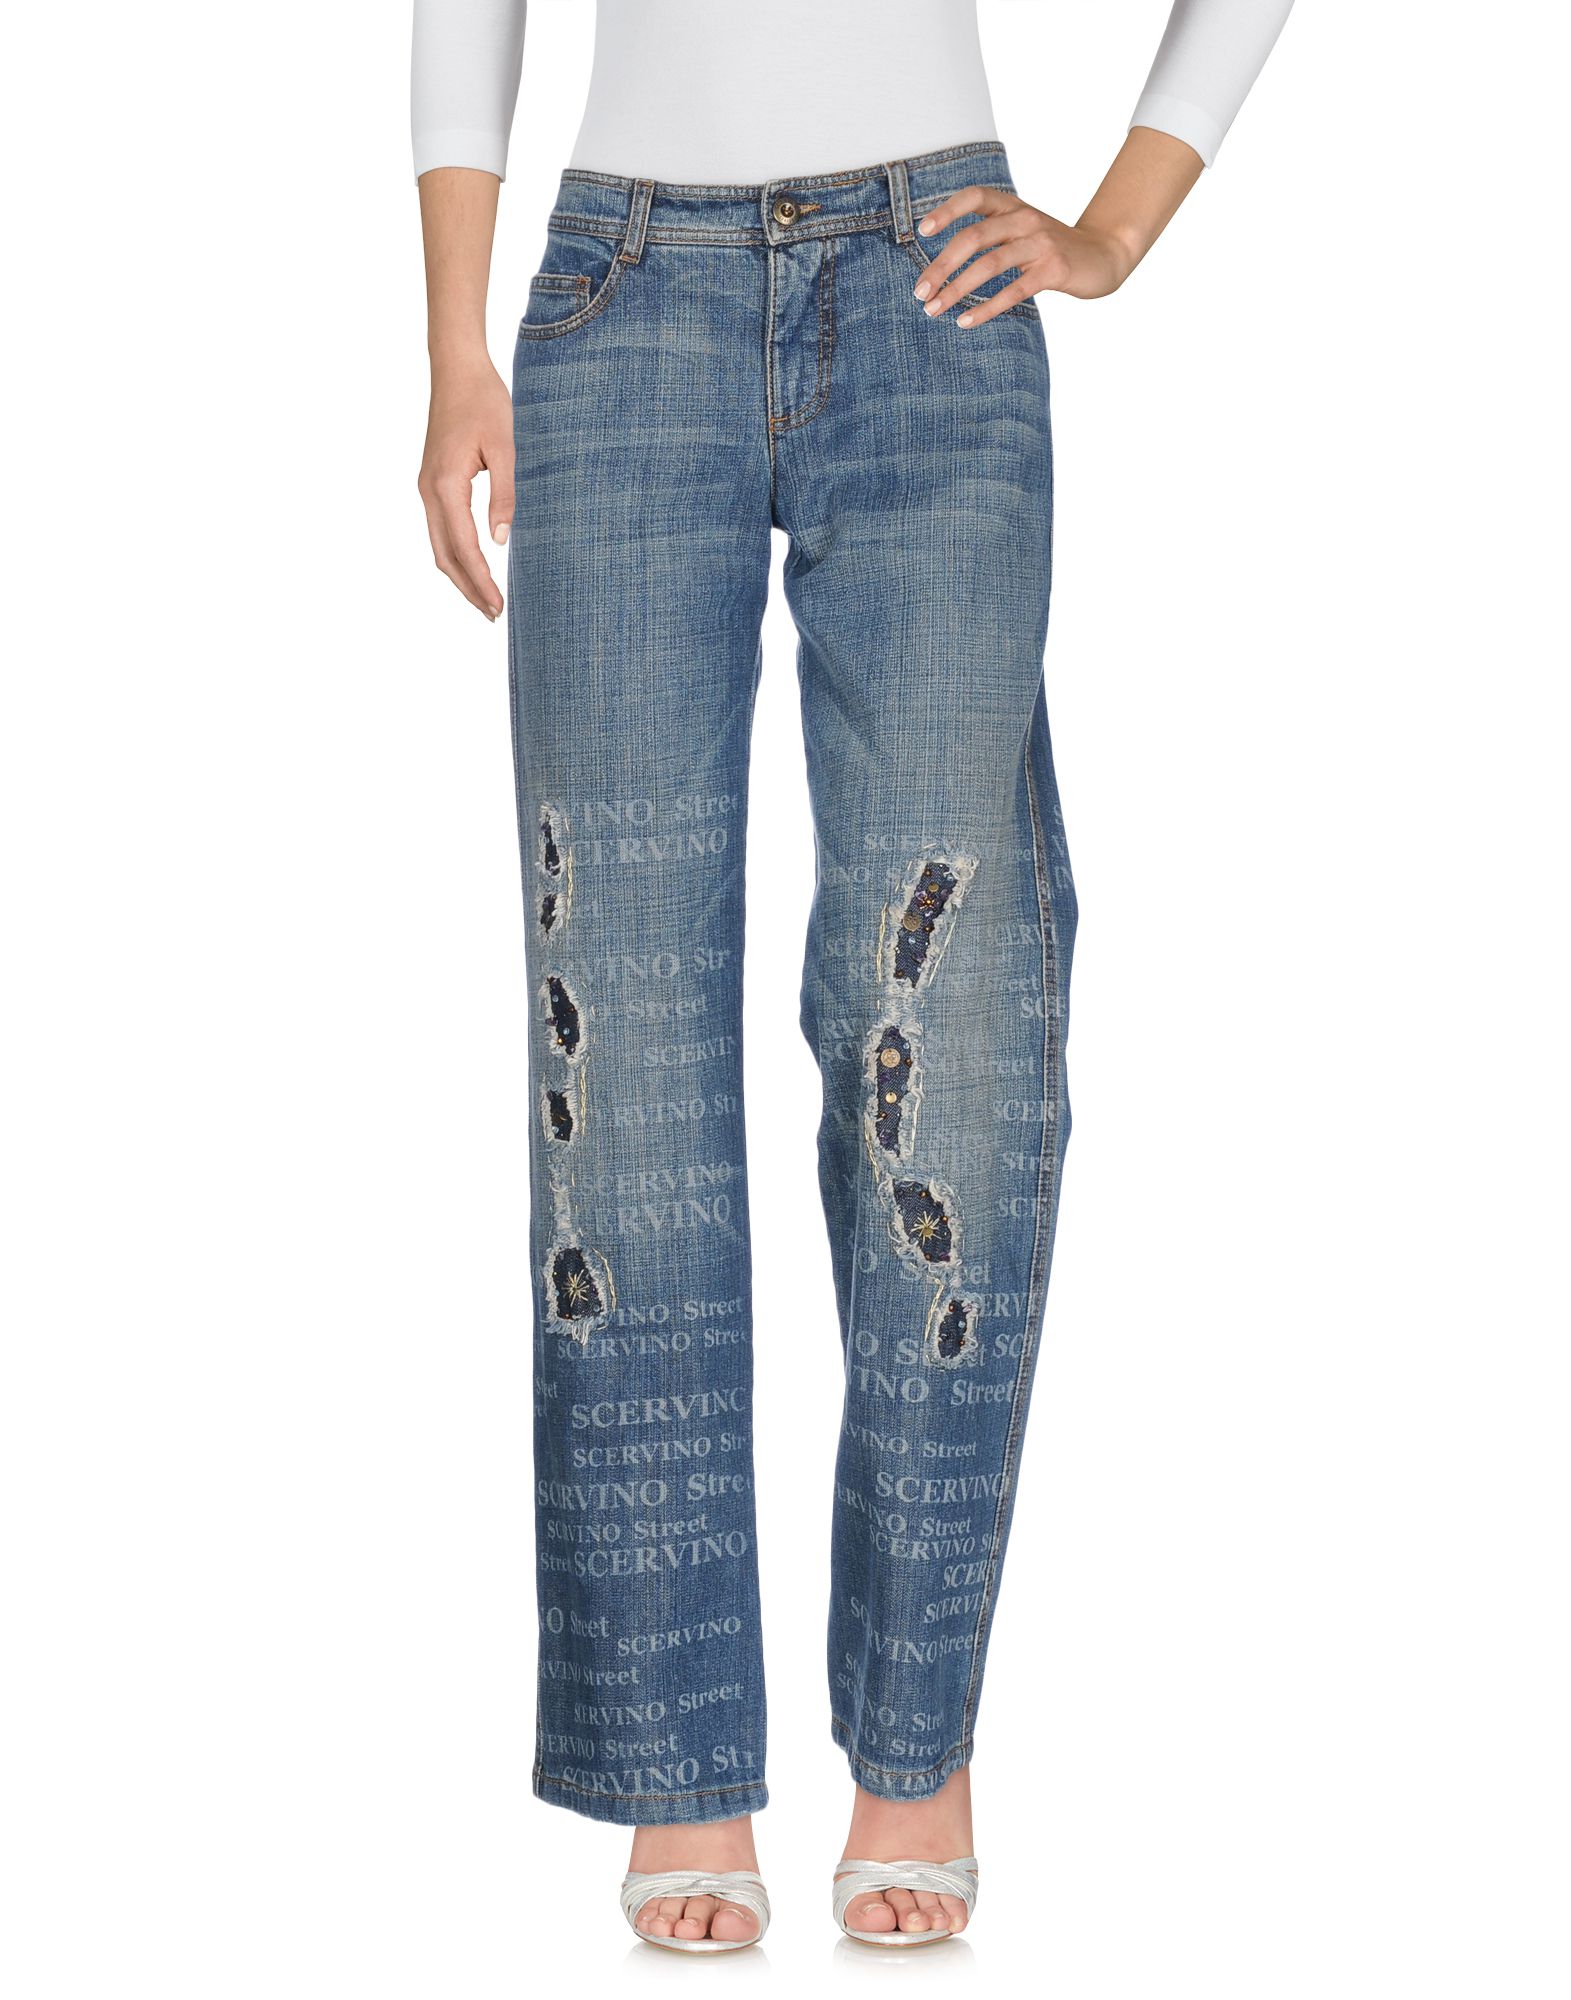 SCERVINO STREET Jeans,42656824TB 3